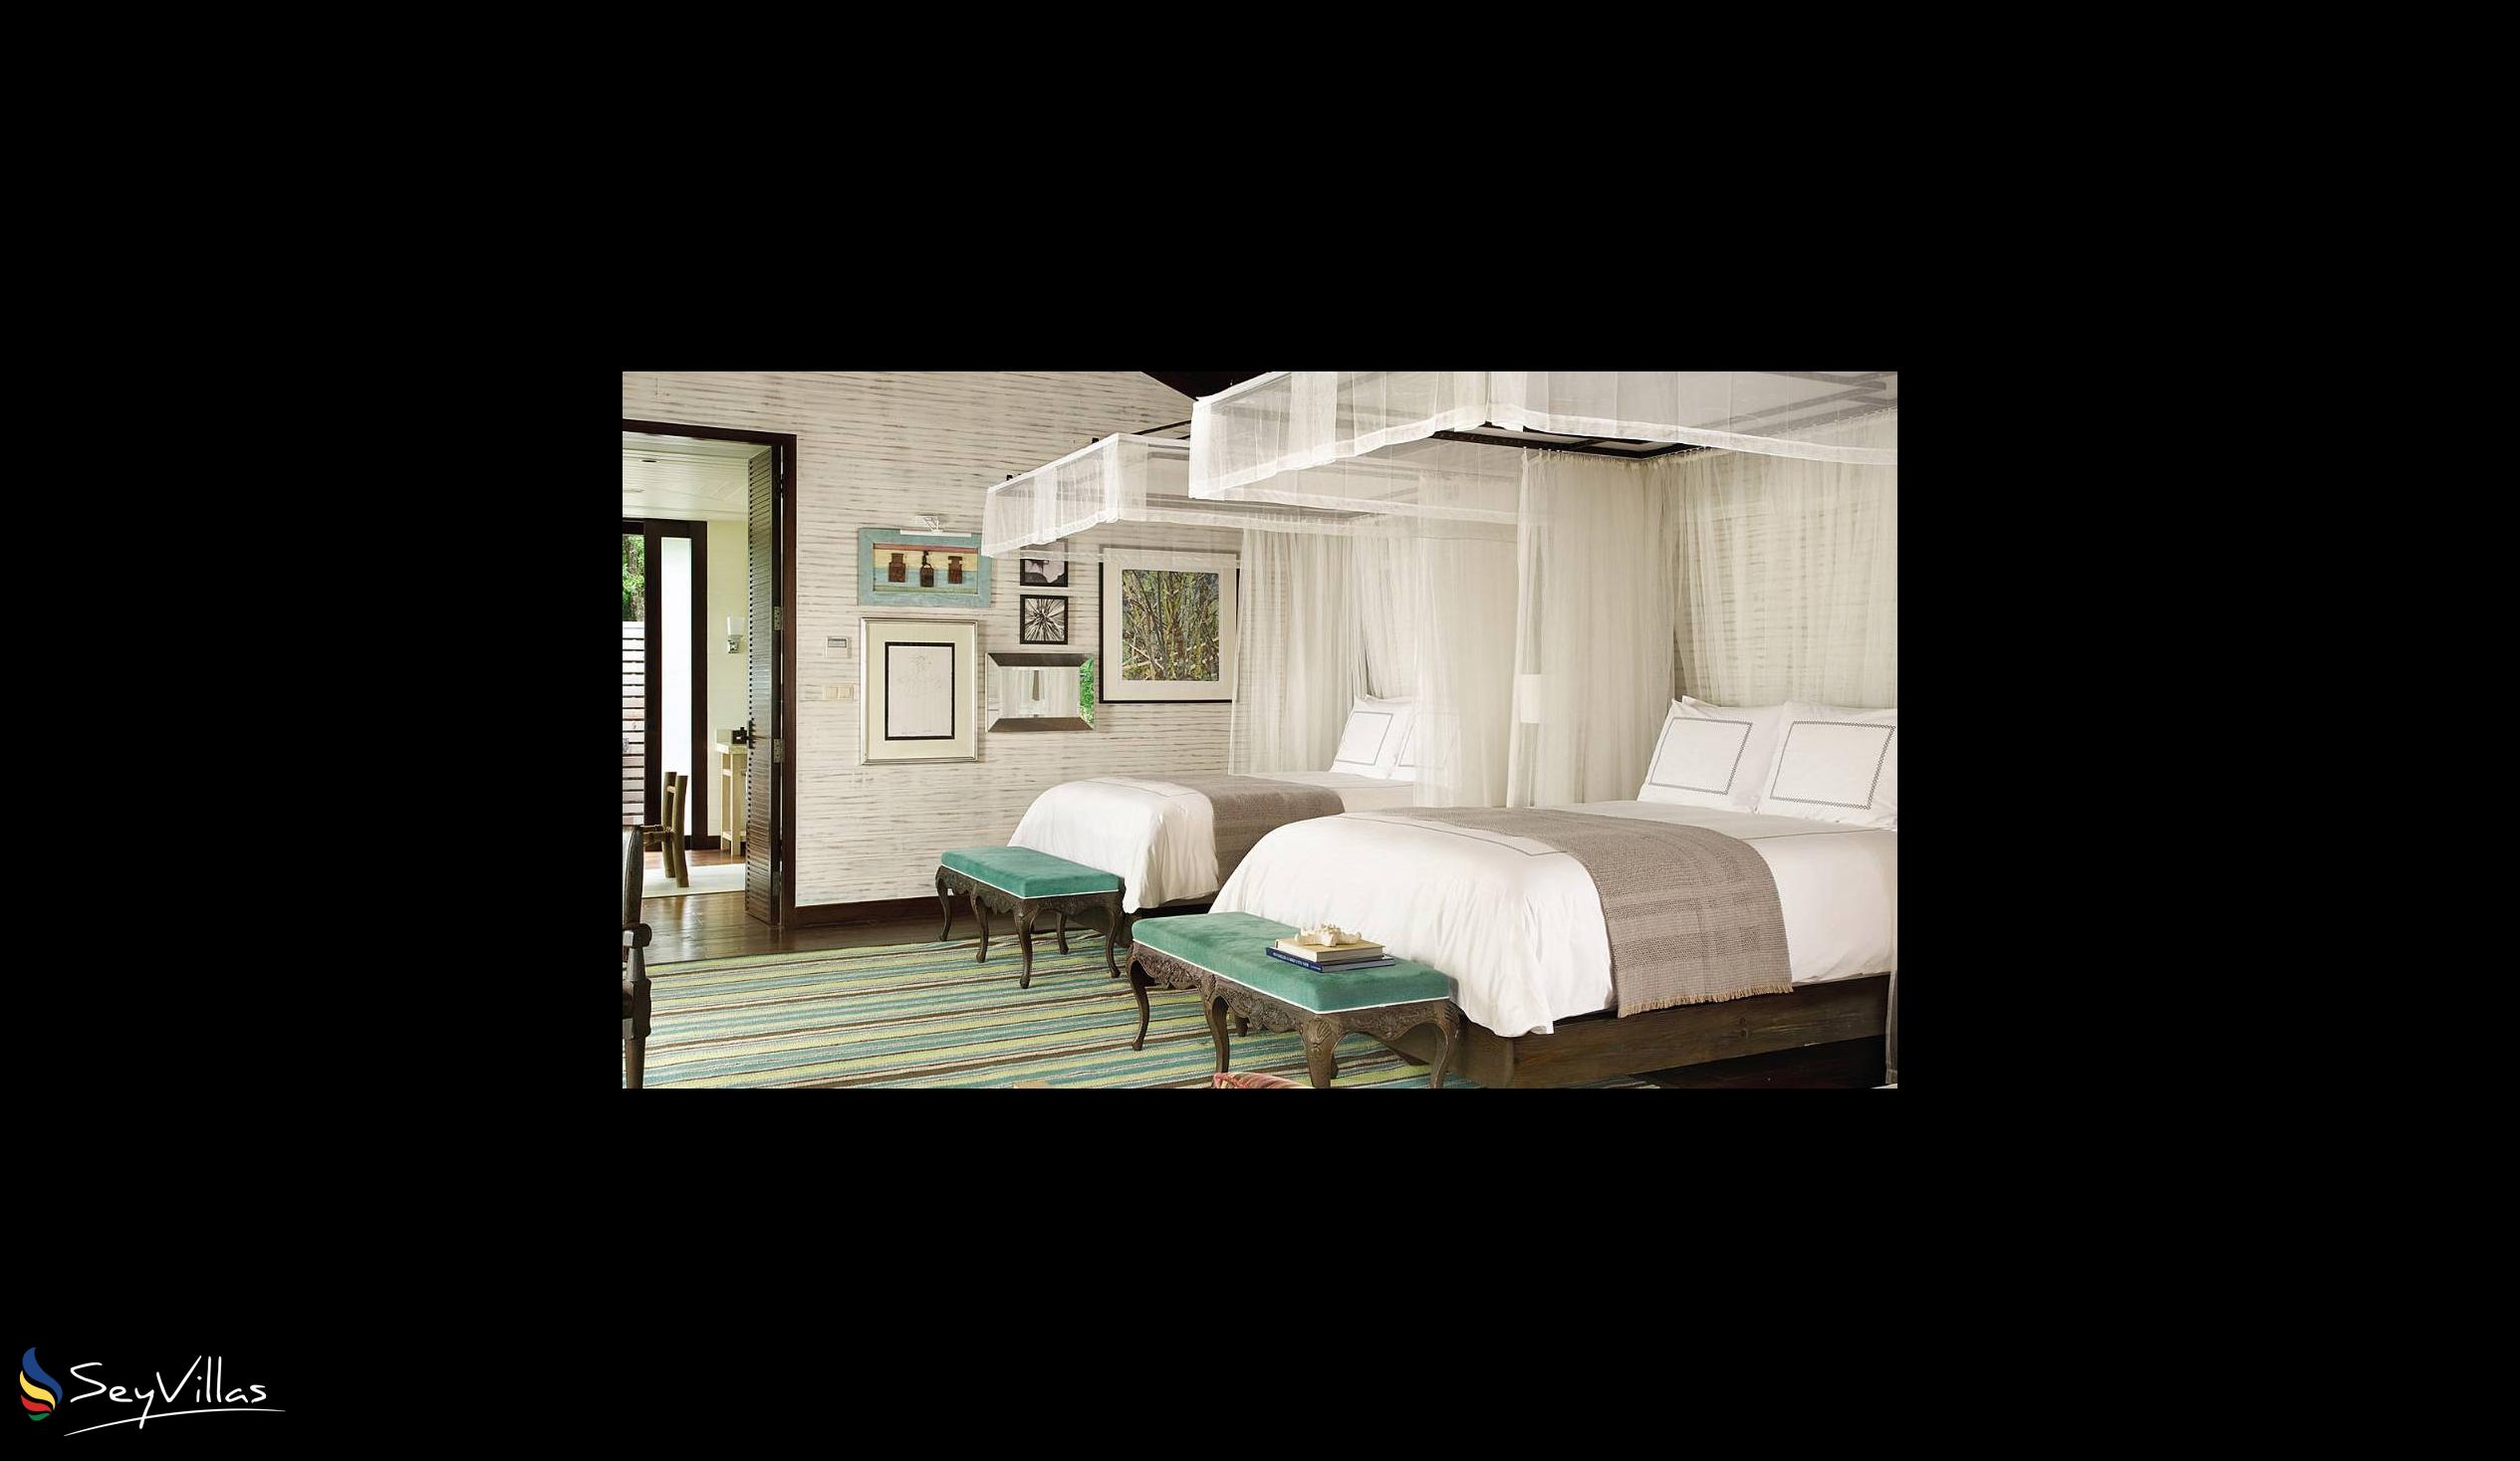 Foto 51: Four Seasons Resort - 2-Bedroom Hilltop Ocean View Suite - Mahé (Seychelles)